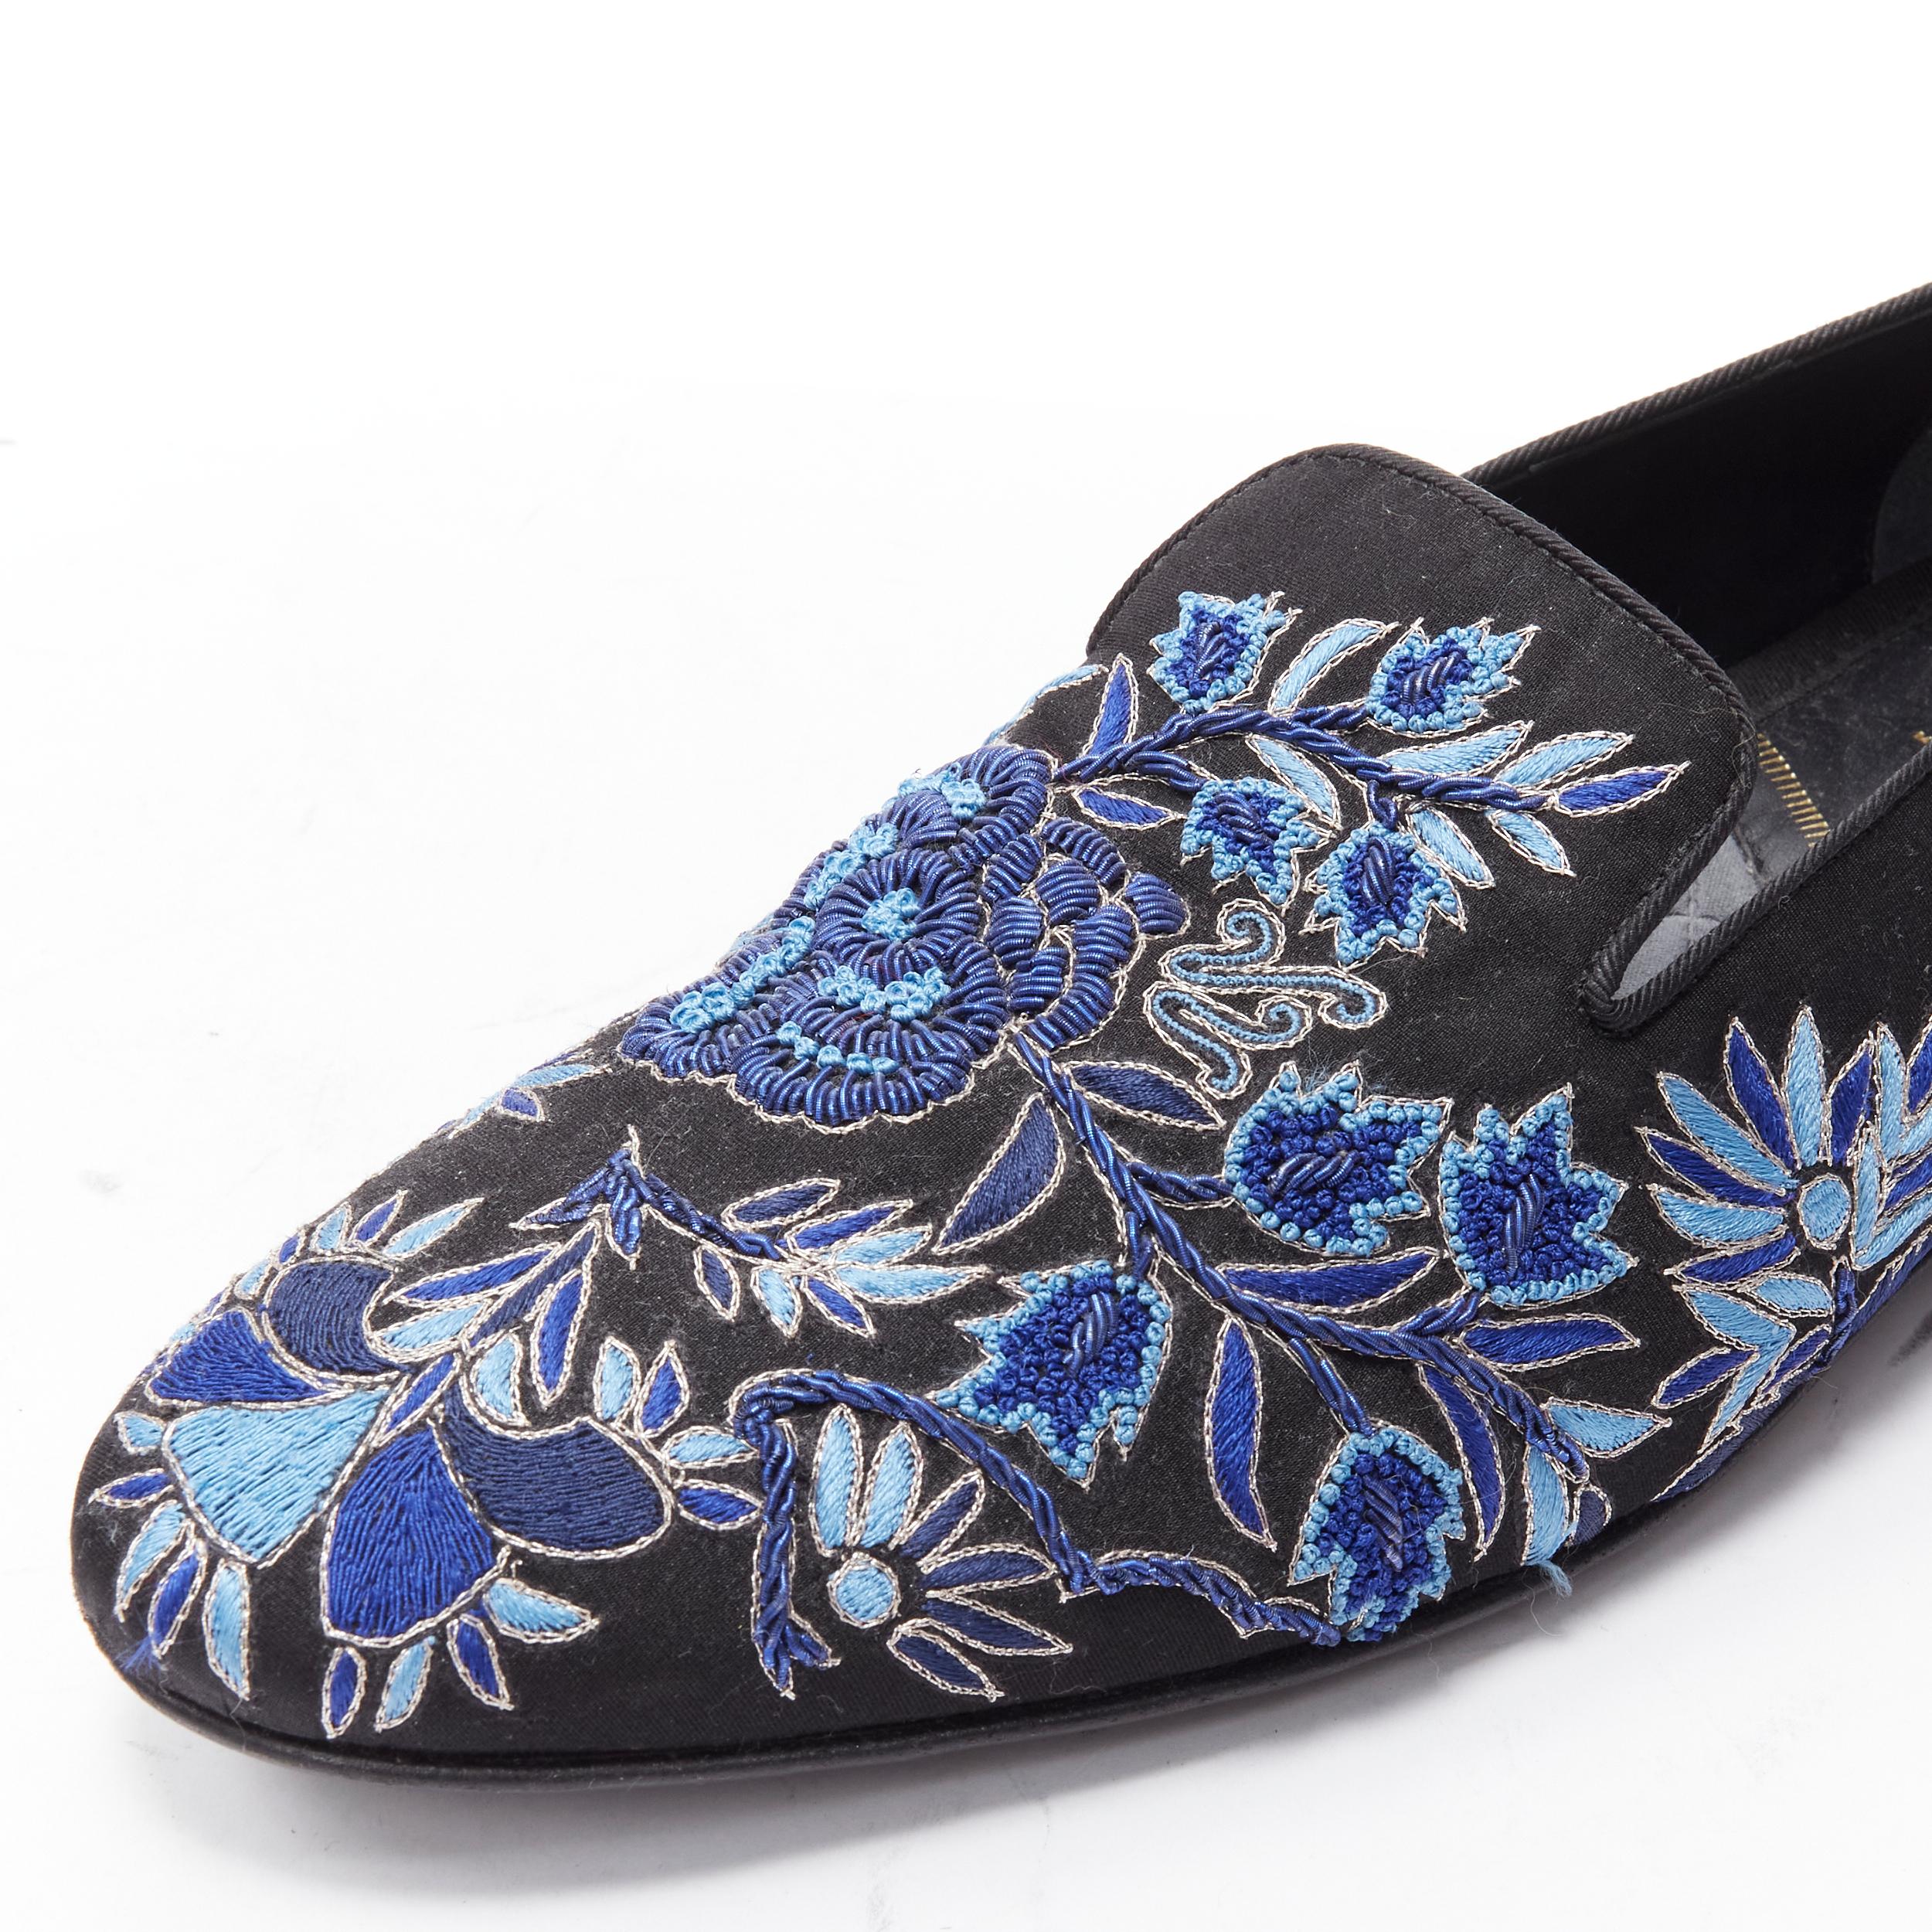 LOUIS LEEMAN black satin blue floral embroidery evening loafer EU42 US9 For Sale 3